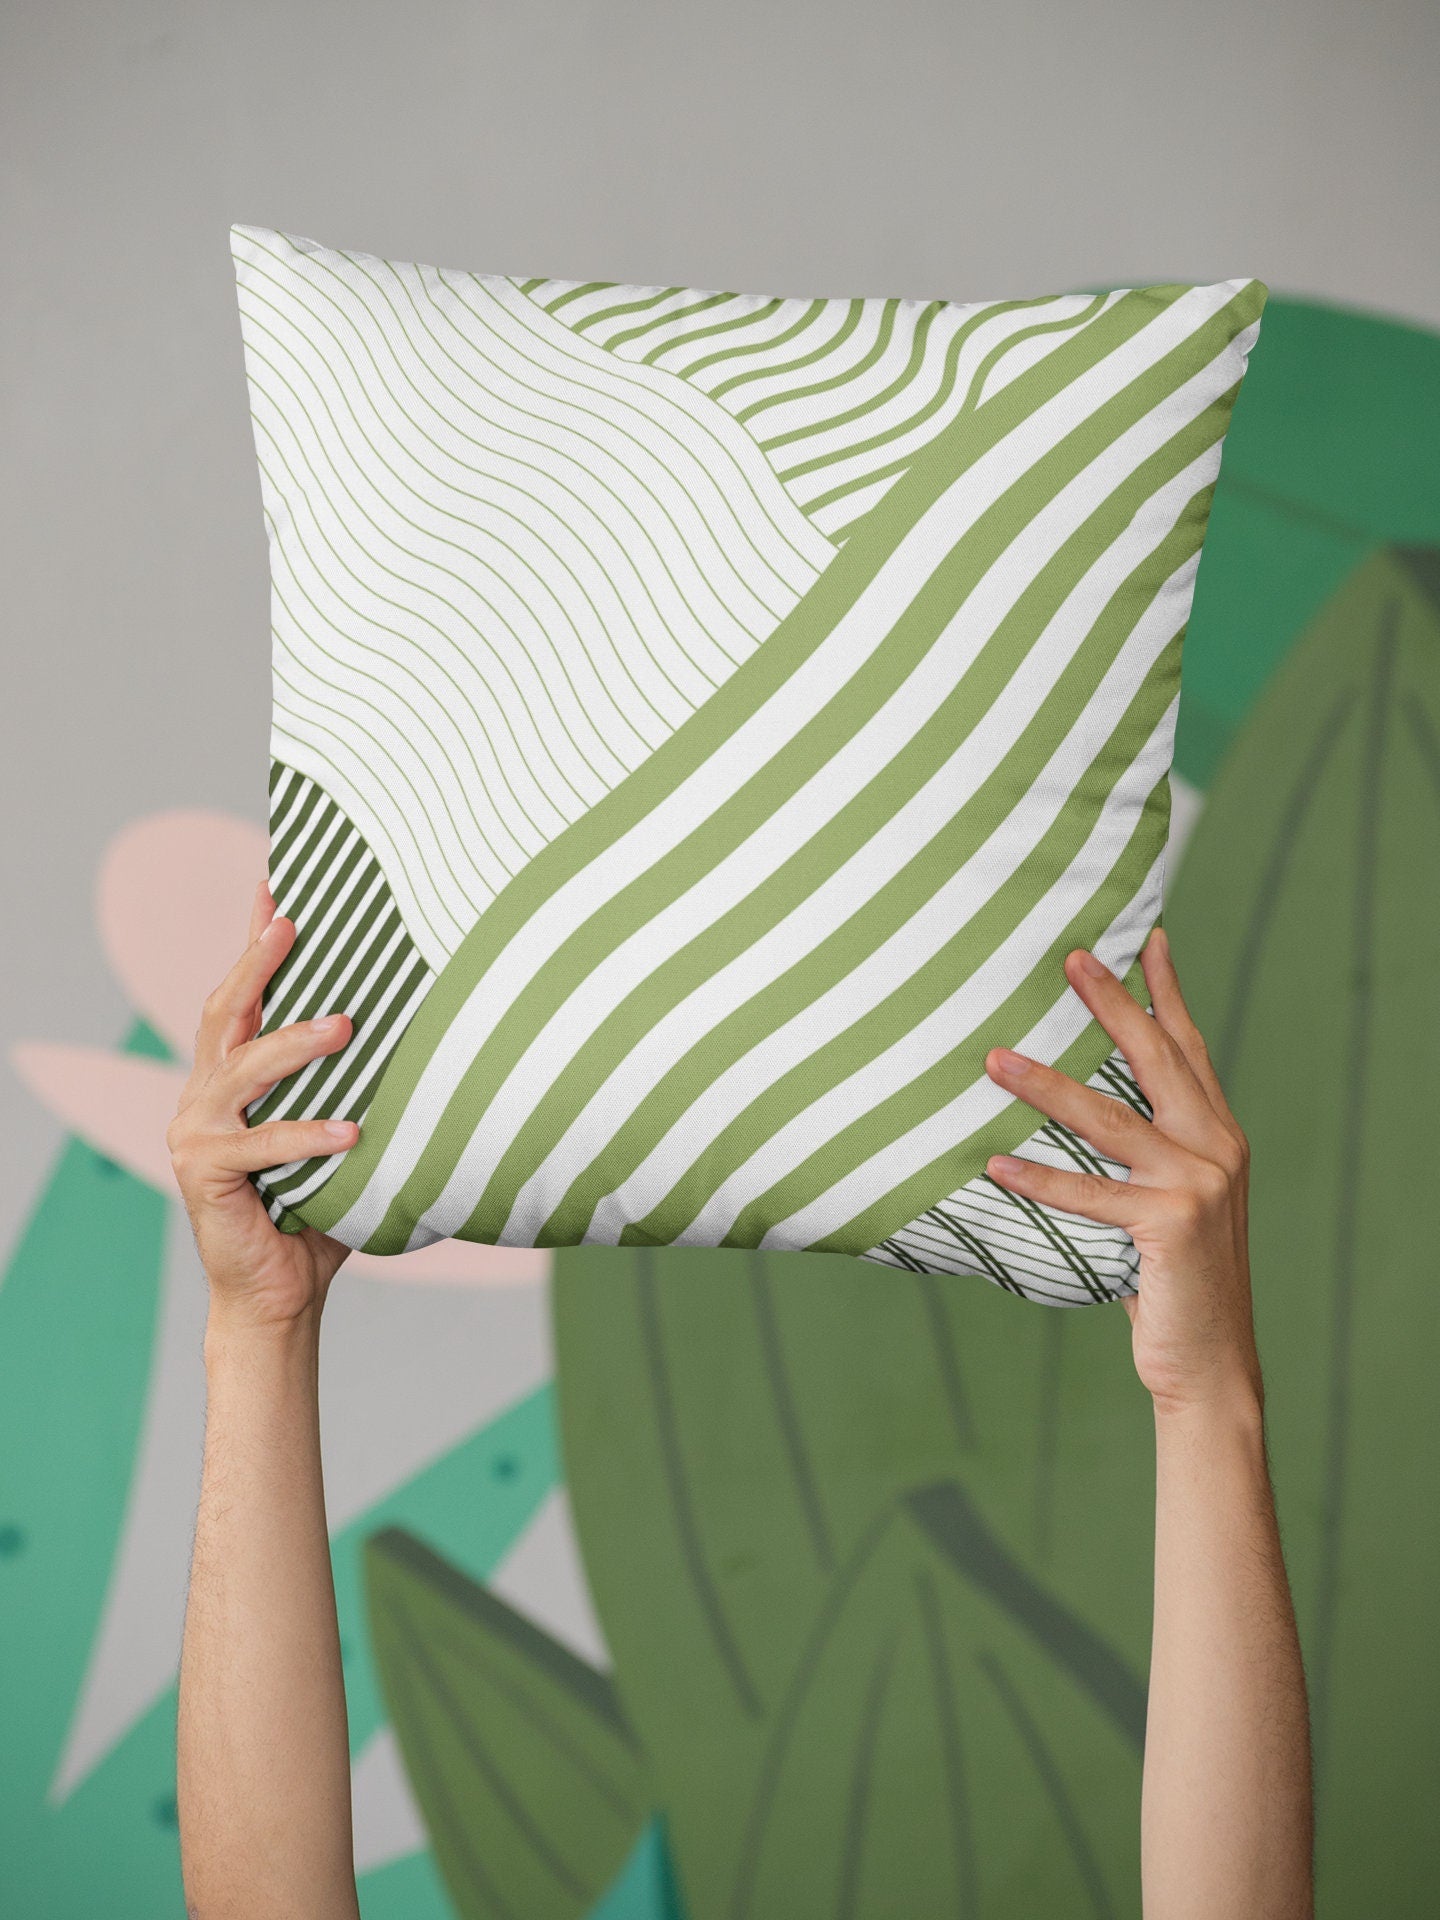 Green Striped Outdoor Pillow